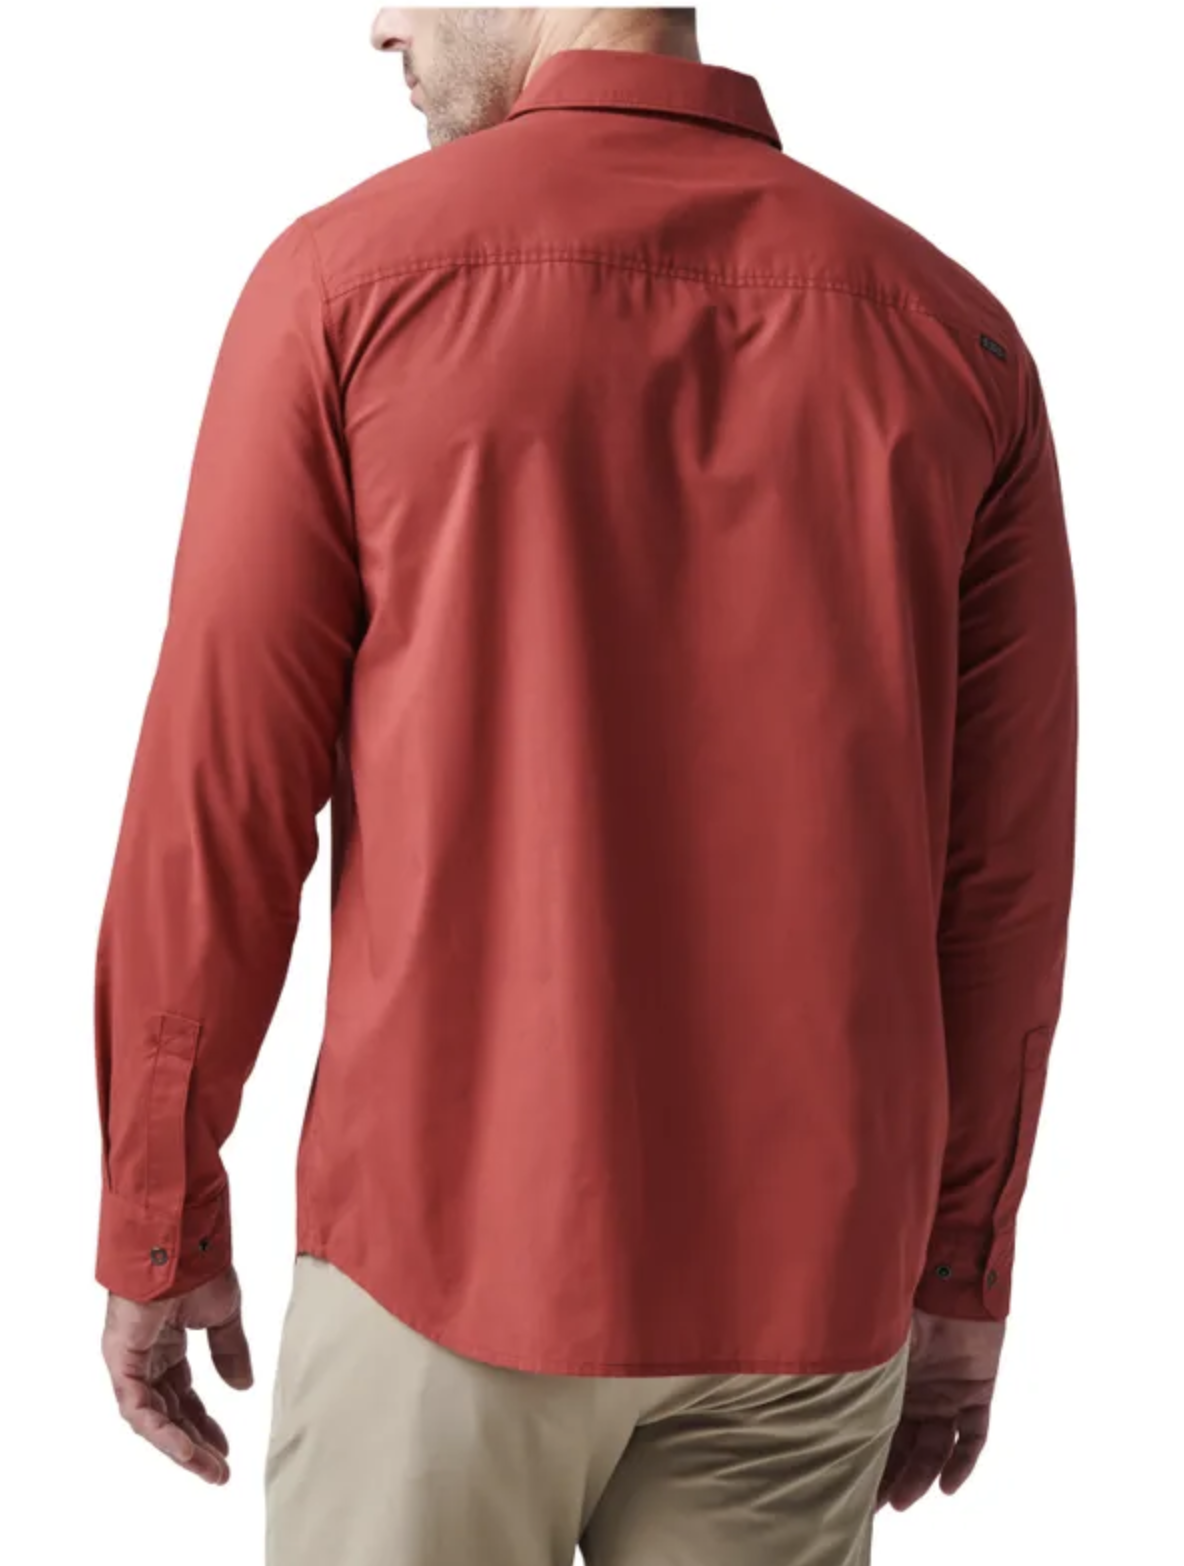 5.11 - Igor Solid Long Sleeve Shirt - Red Bourbon (125)